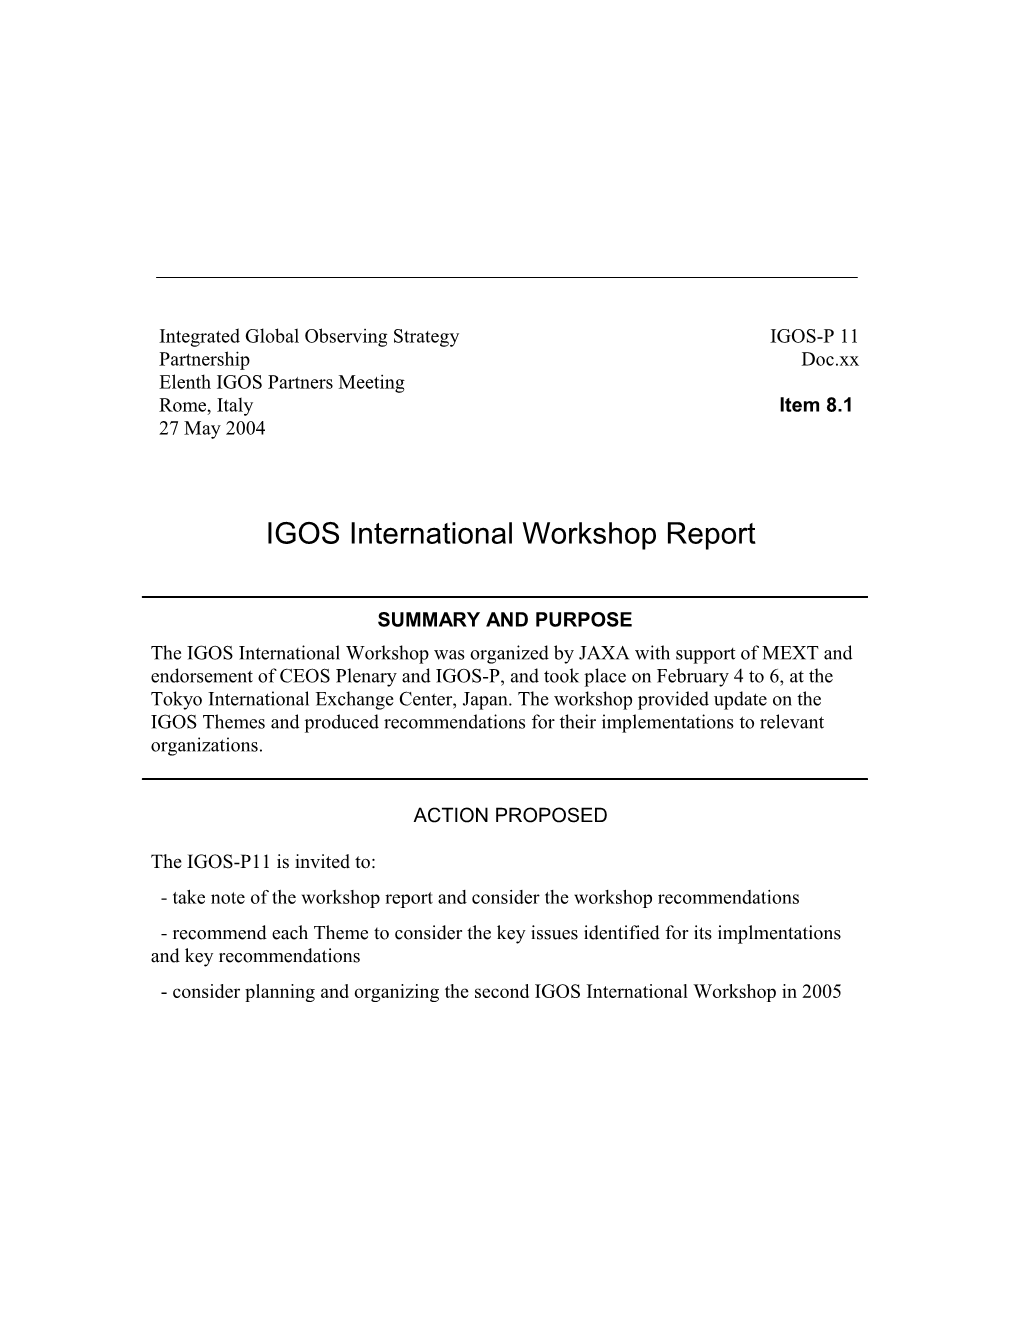 IGOS International Workshop Report